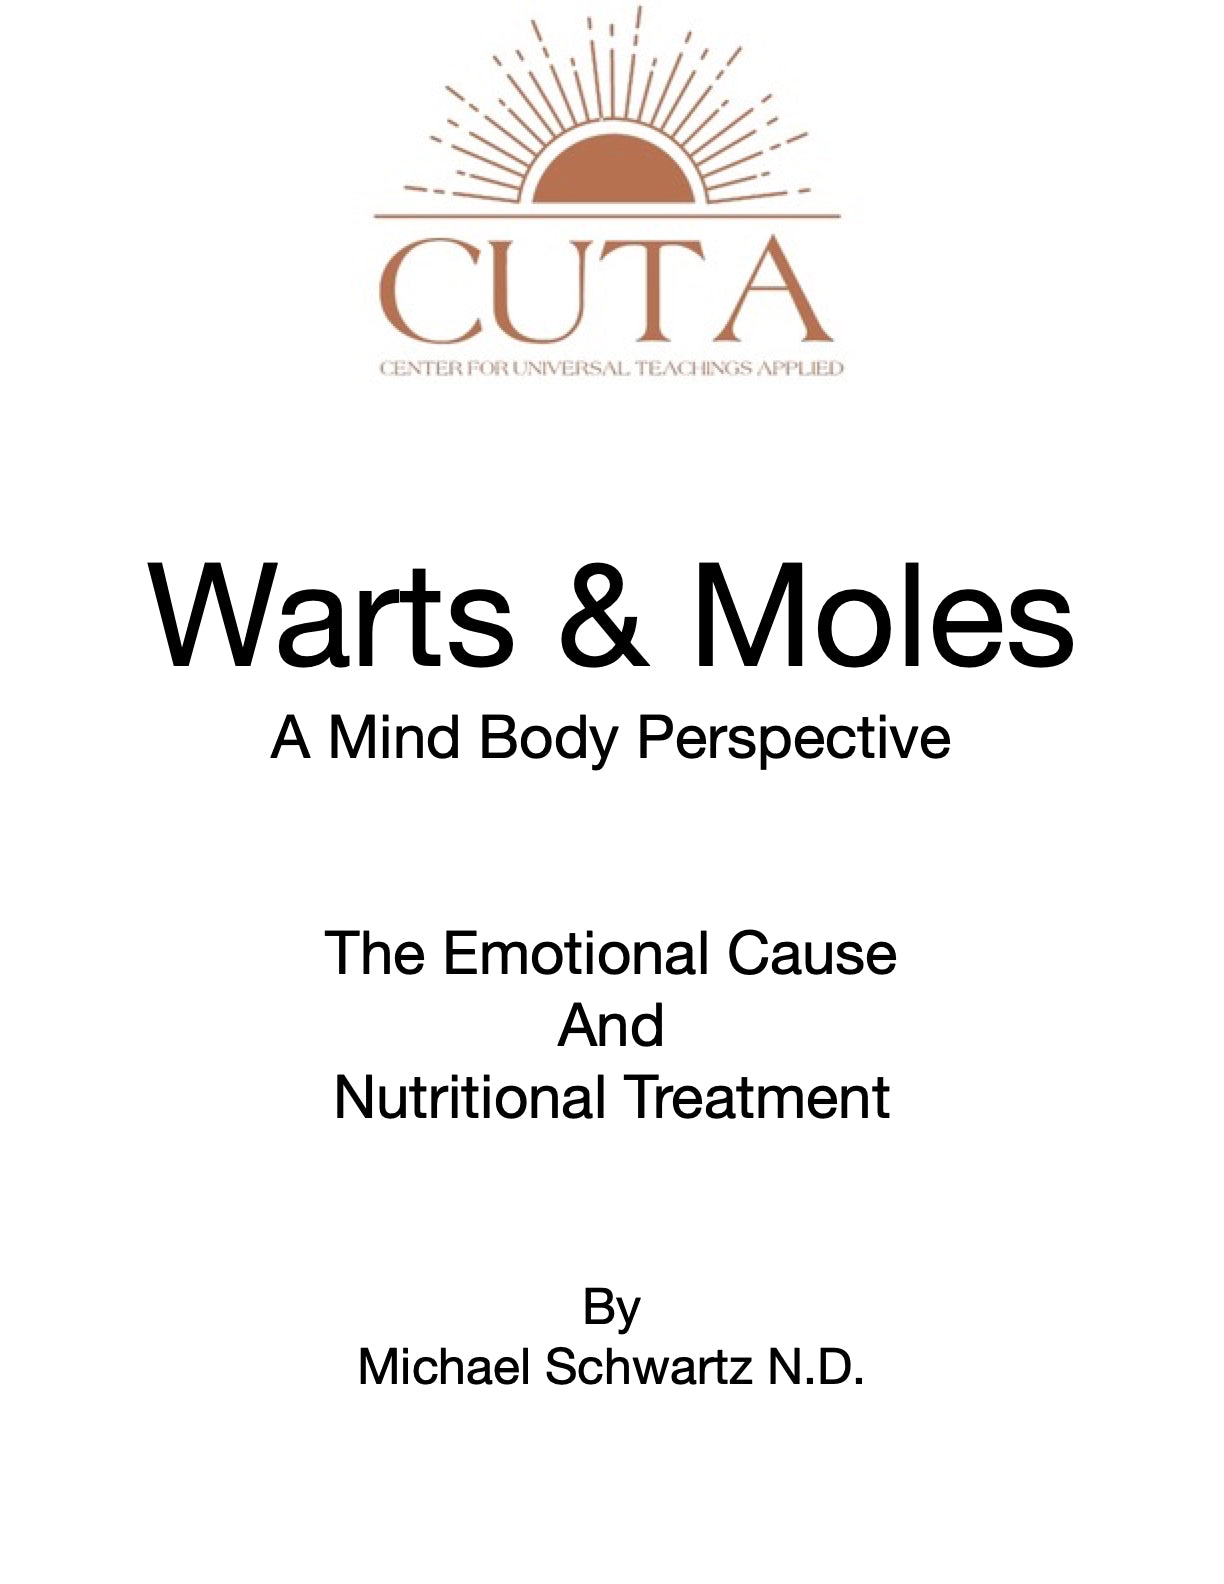 Warts & Moles